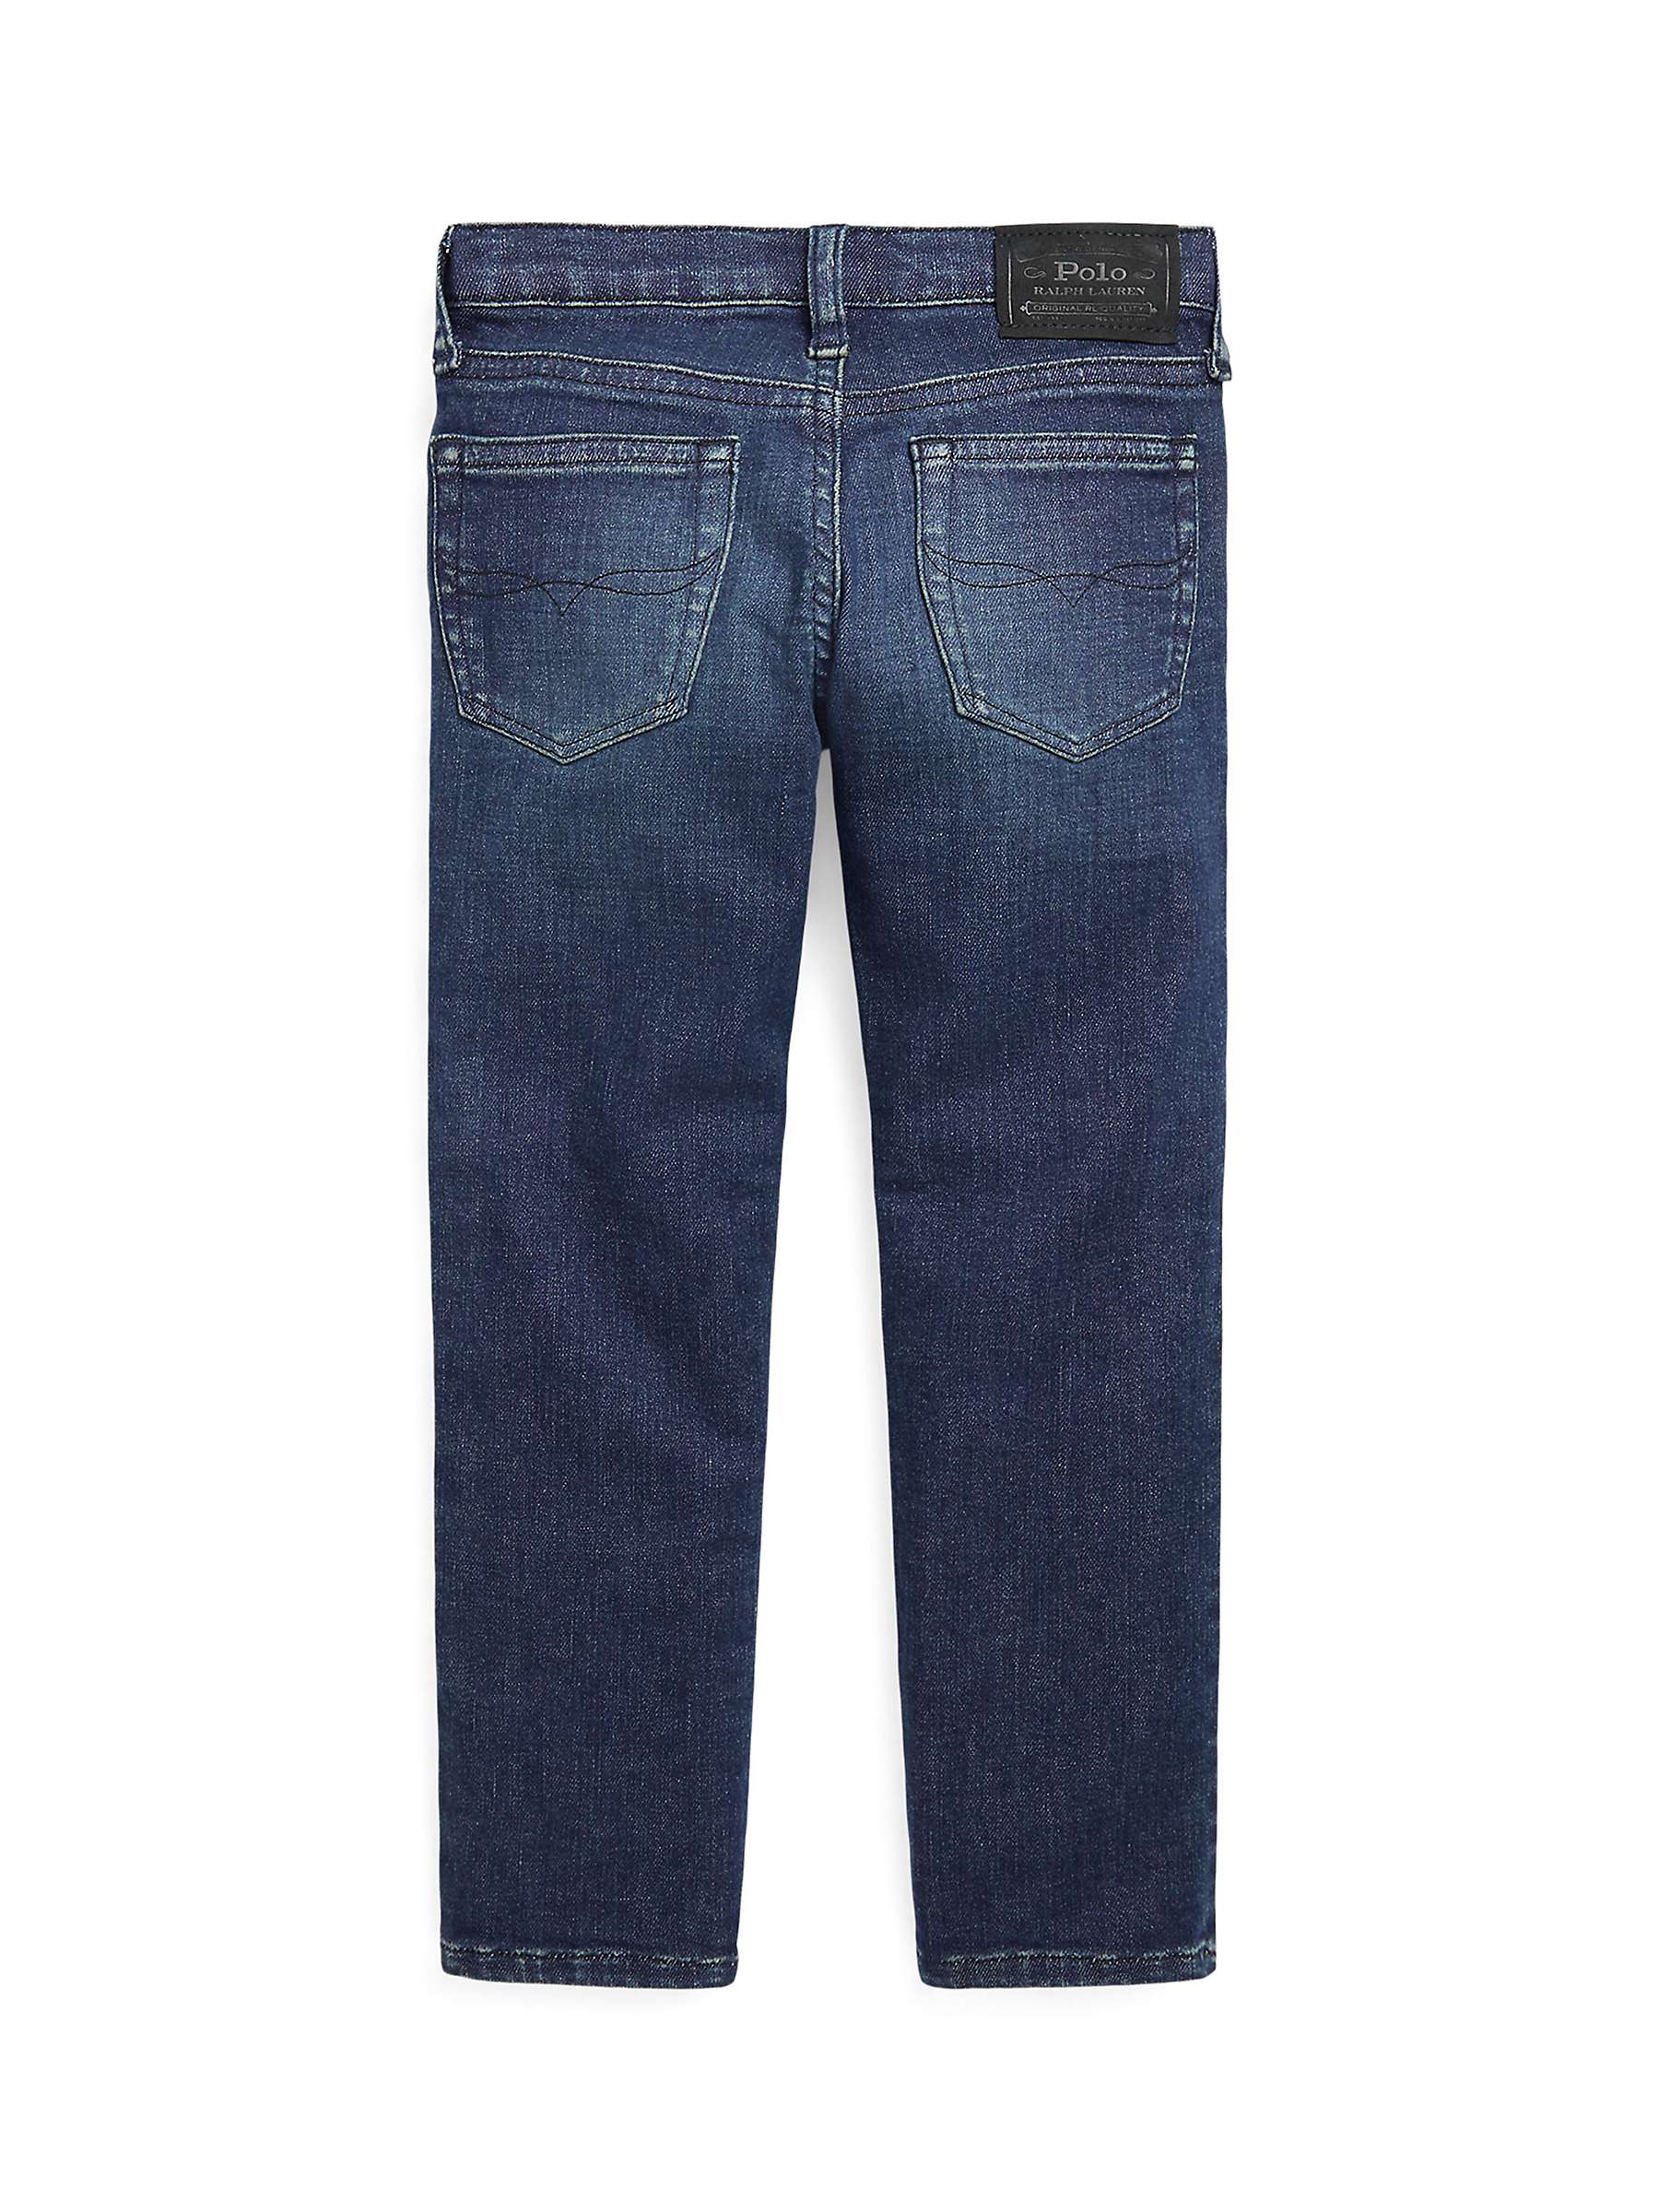 Buy Ralph Lauren Kids' Eldridge Skinny Stretch Jeans, Payton Wash Online at johnlewis.com